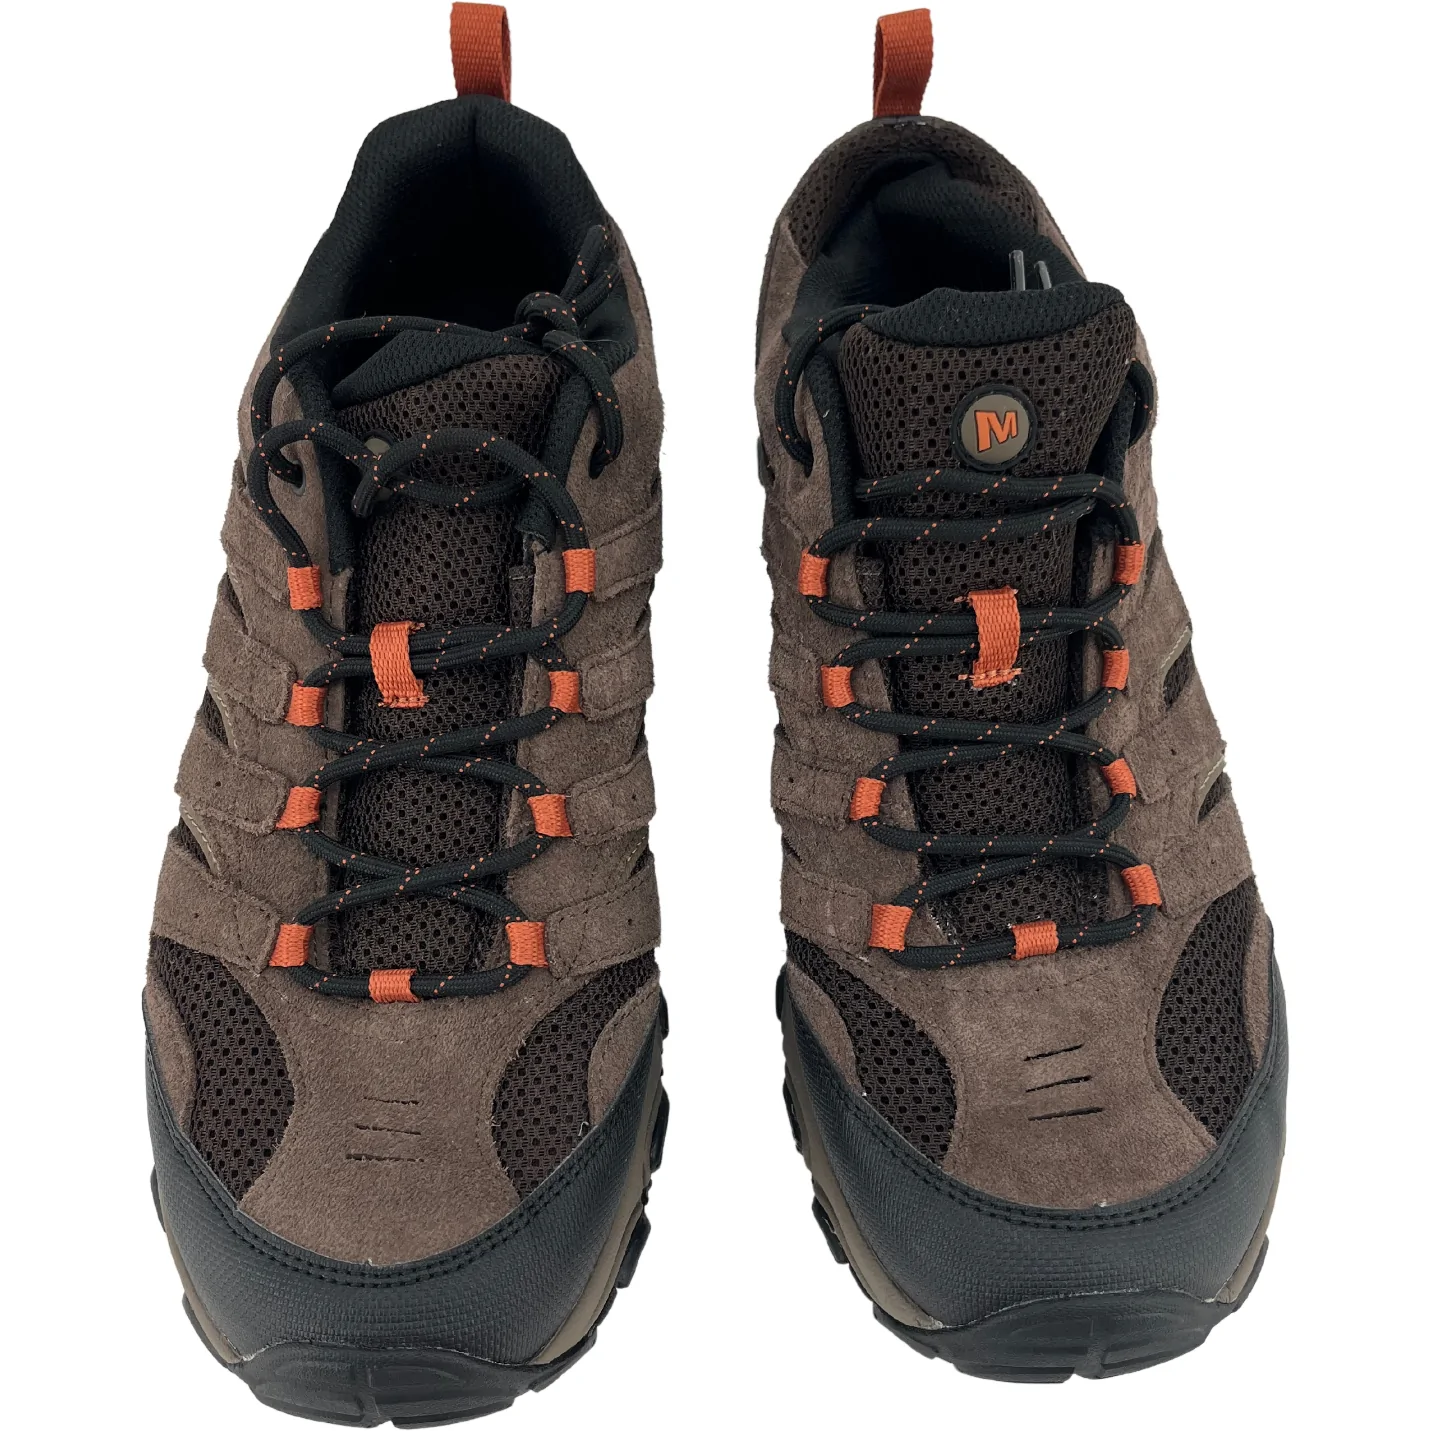 Merrell Men's Hiking Shoe / Outdoor Shoe / Brown / Various Sizes